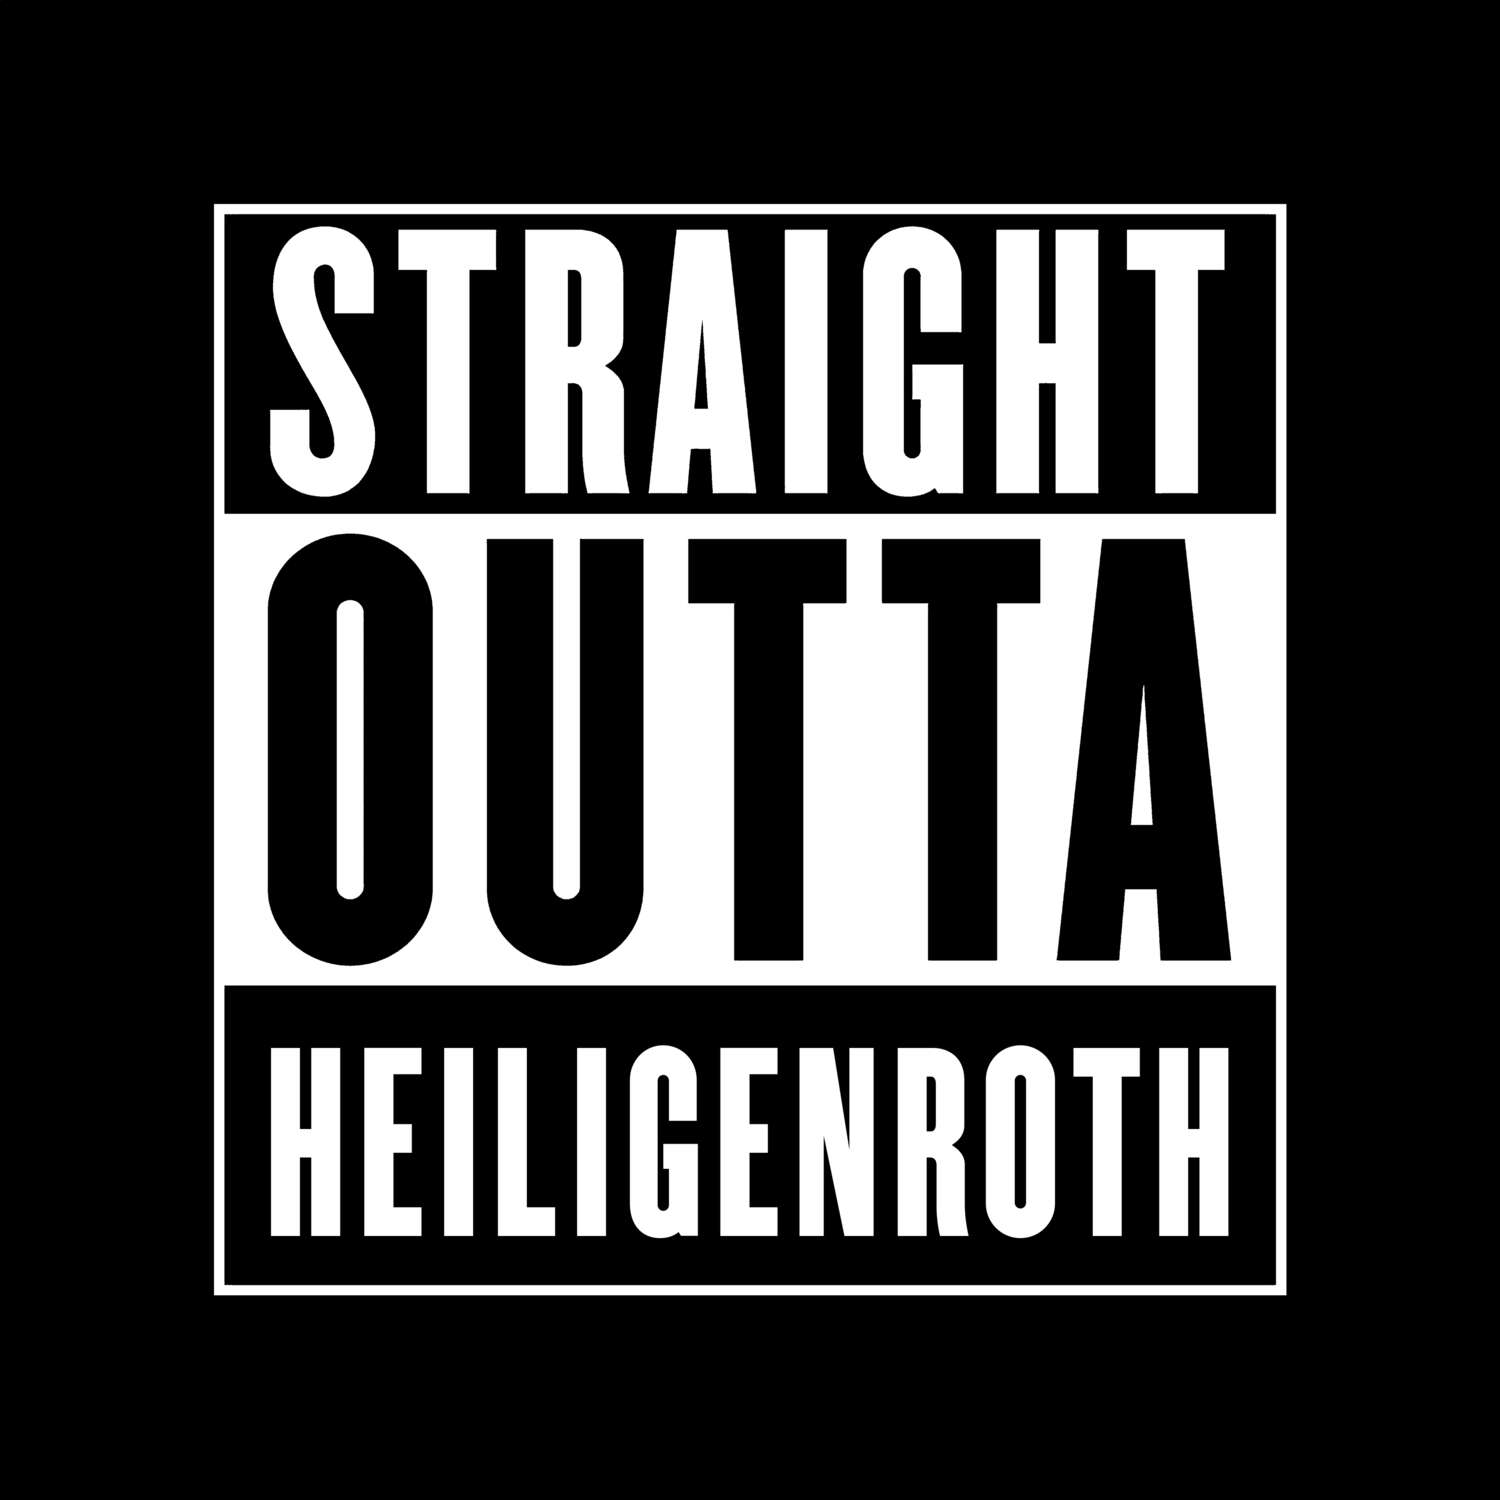 Heiligenroth T-Shirt »Straight Outta«